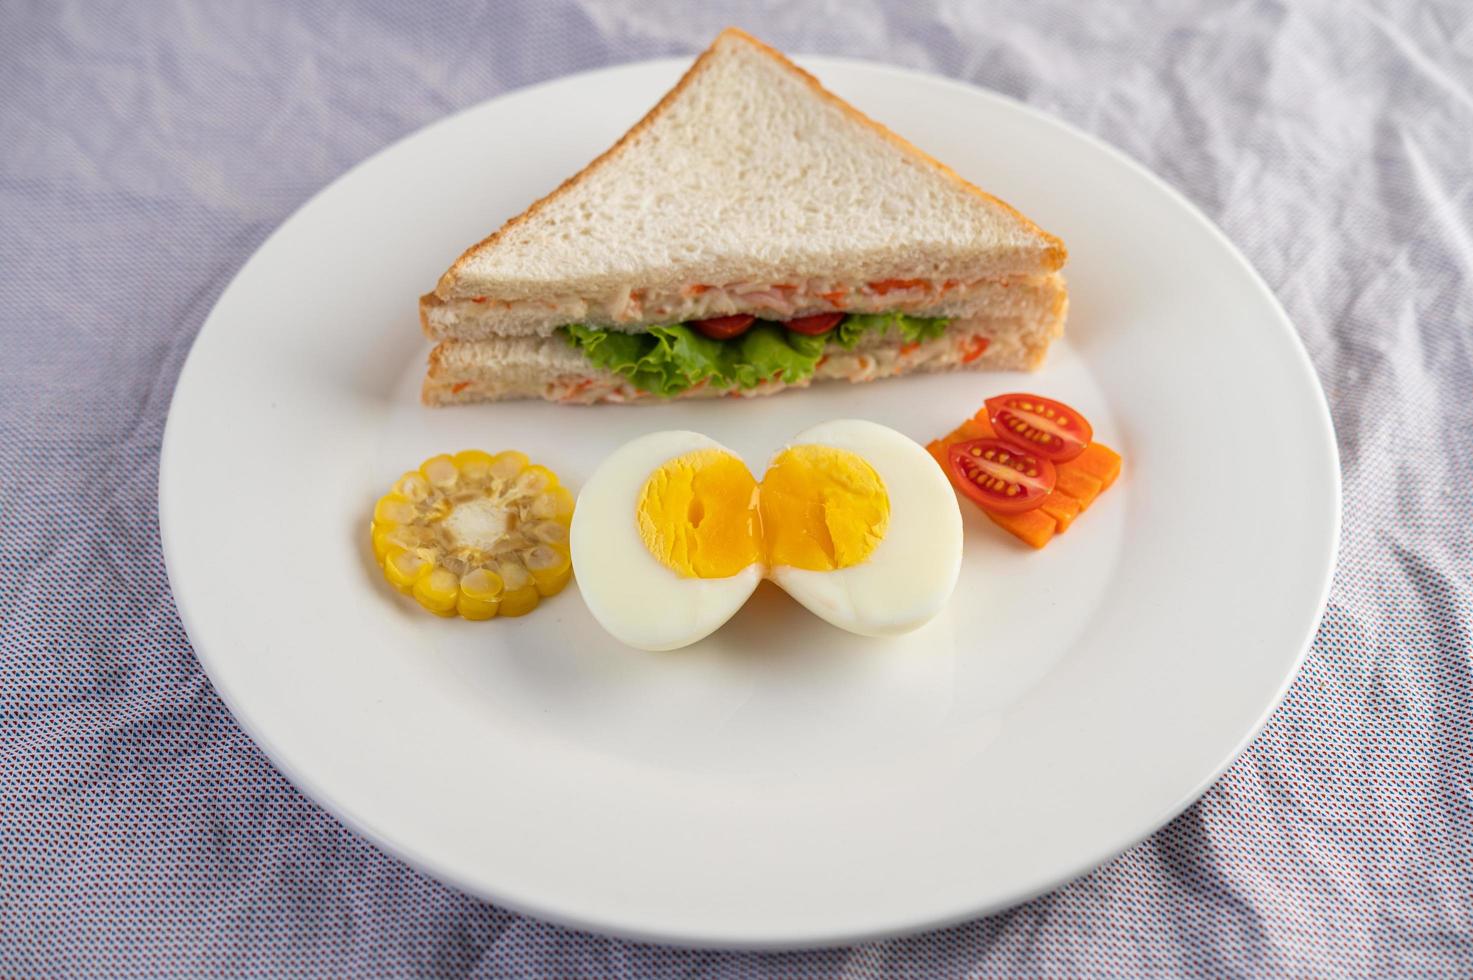 gekookte eieren, maïs, tomatensandwich op een witte plaat foto